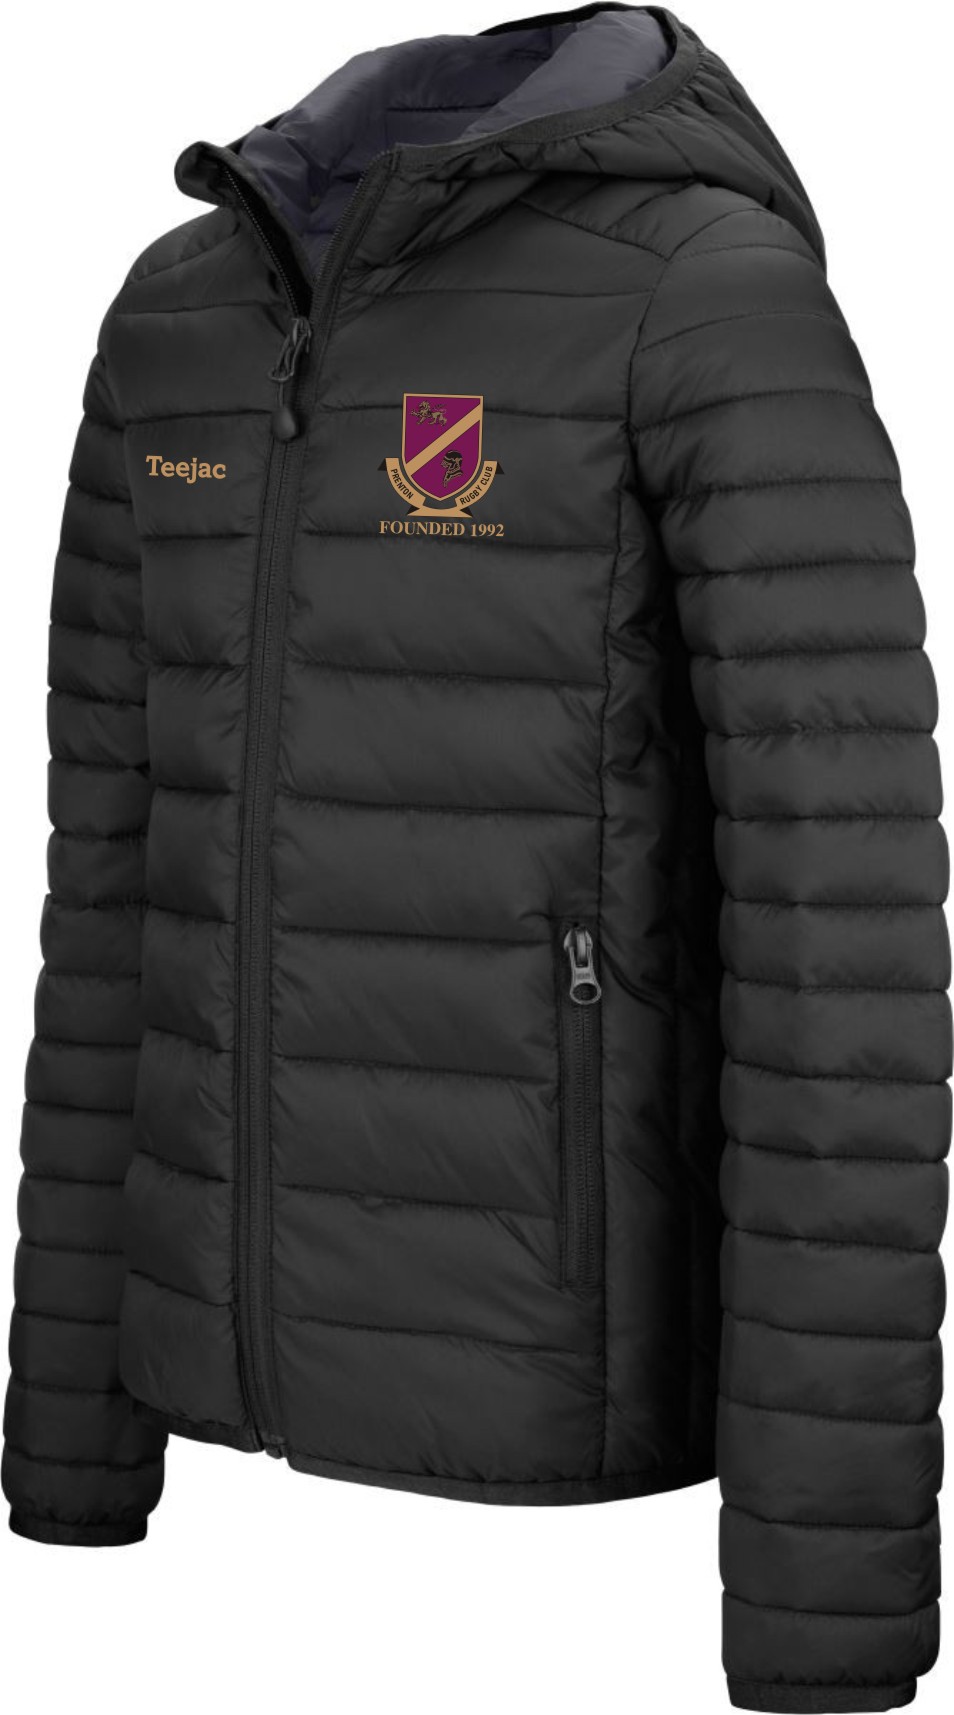 Prenton RFC Countoured Hooded Jacket - Teejac